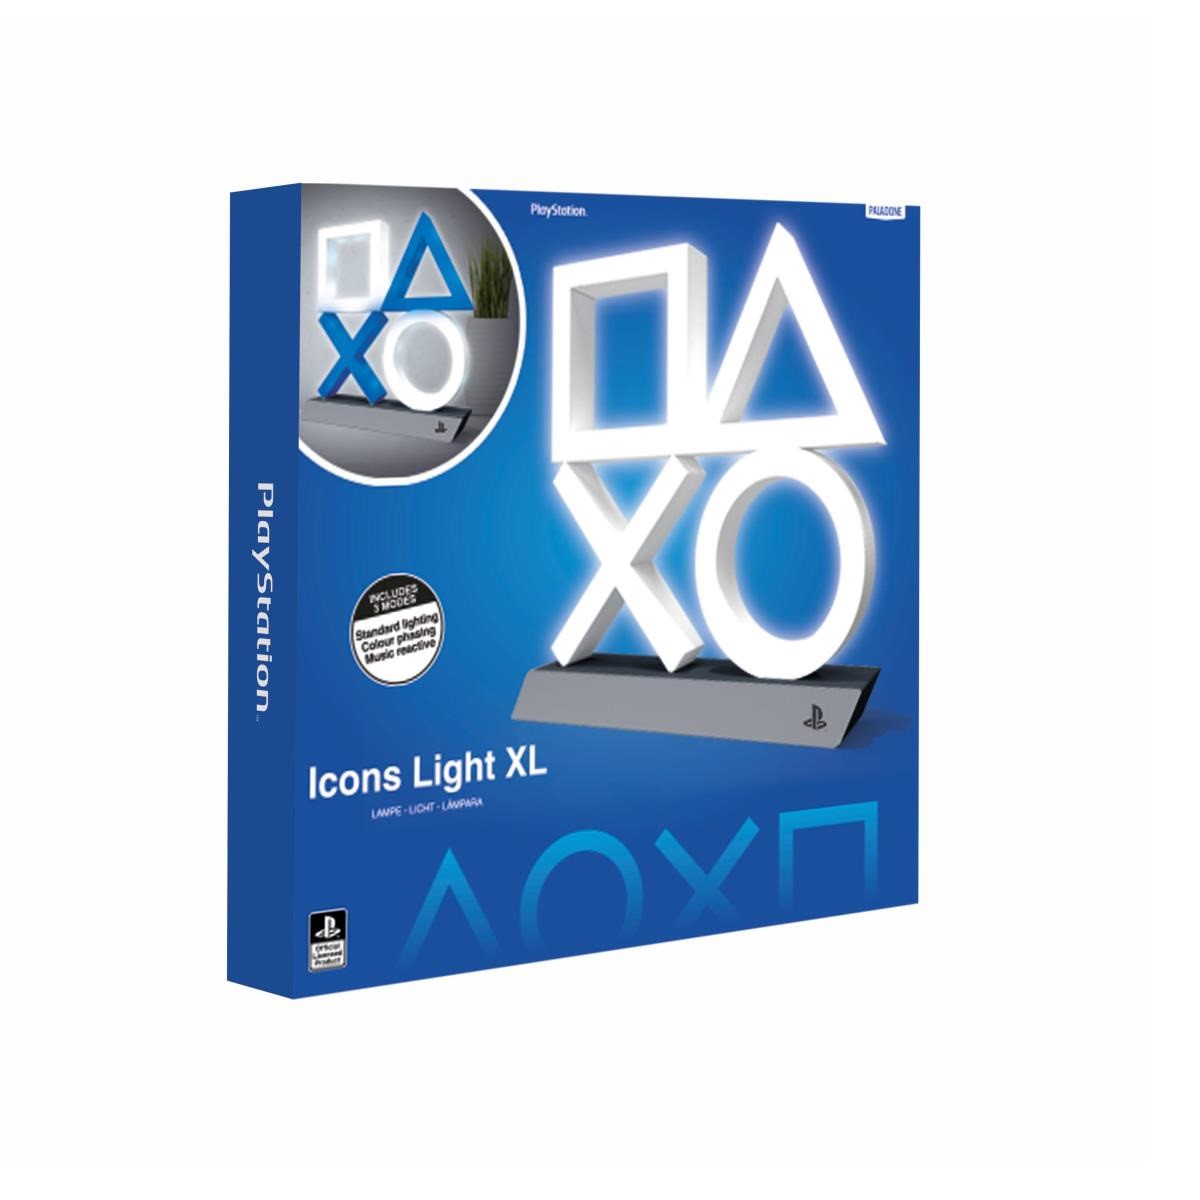 Lampade & Co.: Lampada Playstation Icon Lights XL